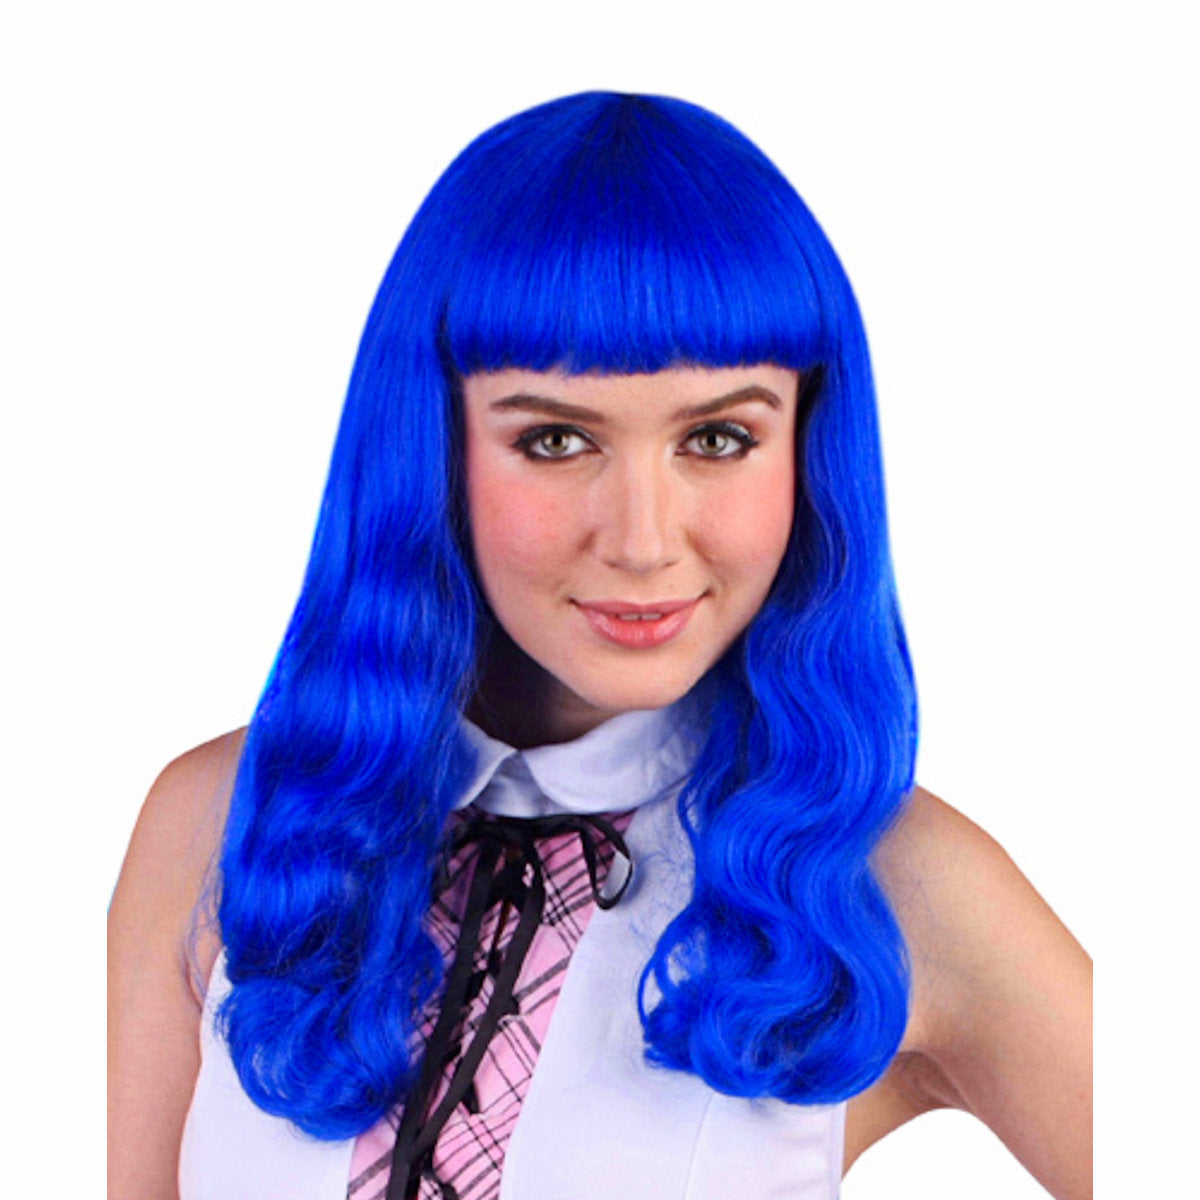 Katy Electric Blue Long Hair Wig Fancy Dress Costume Wig